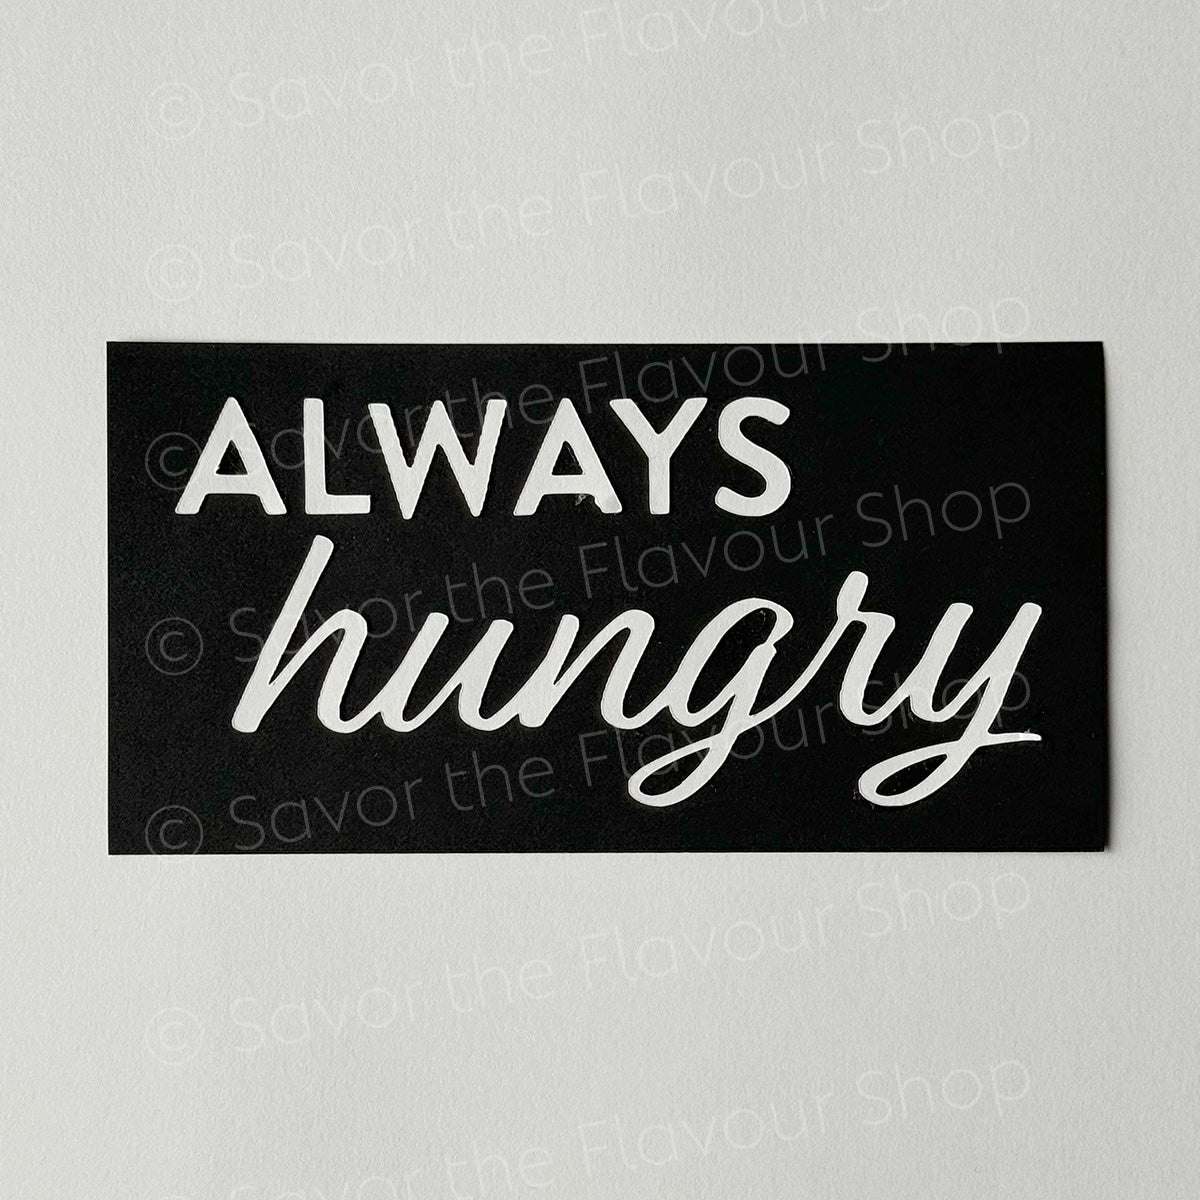 Always Hungry - SVG &amp; Printable